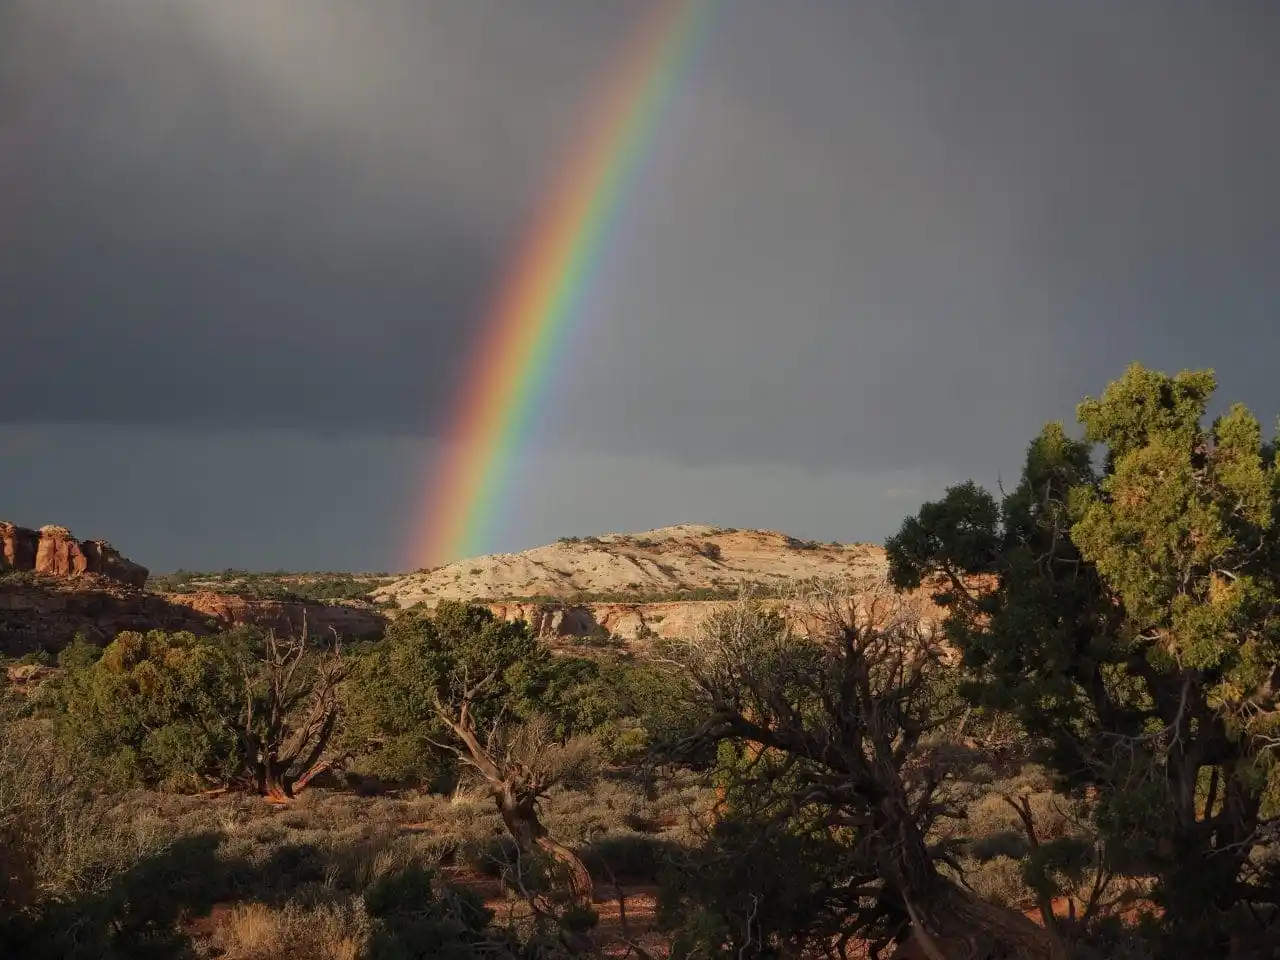 A rainbow shining over Canyonlands National Park